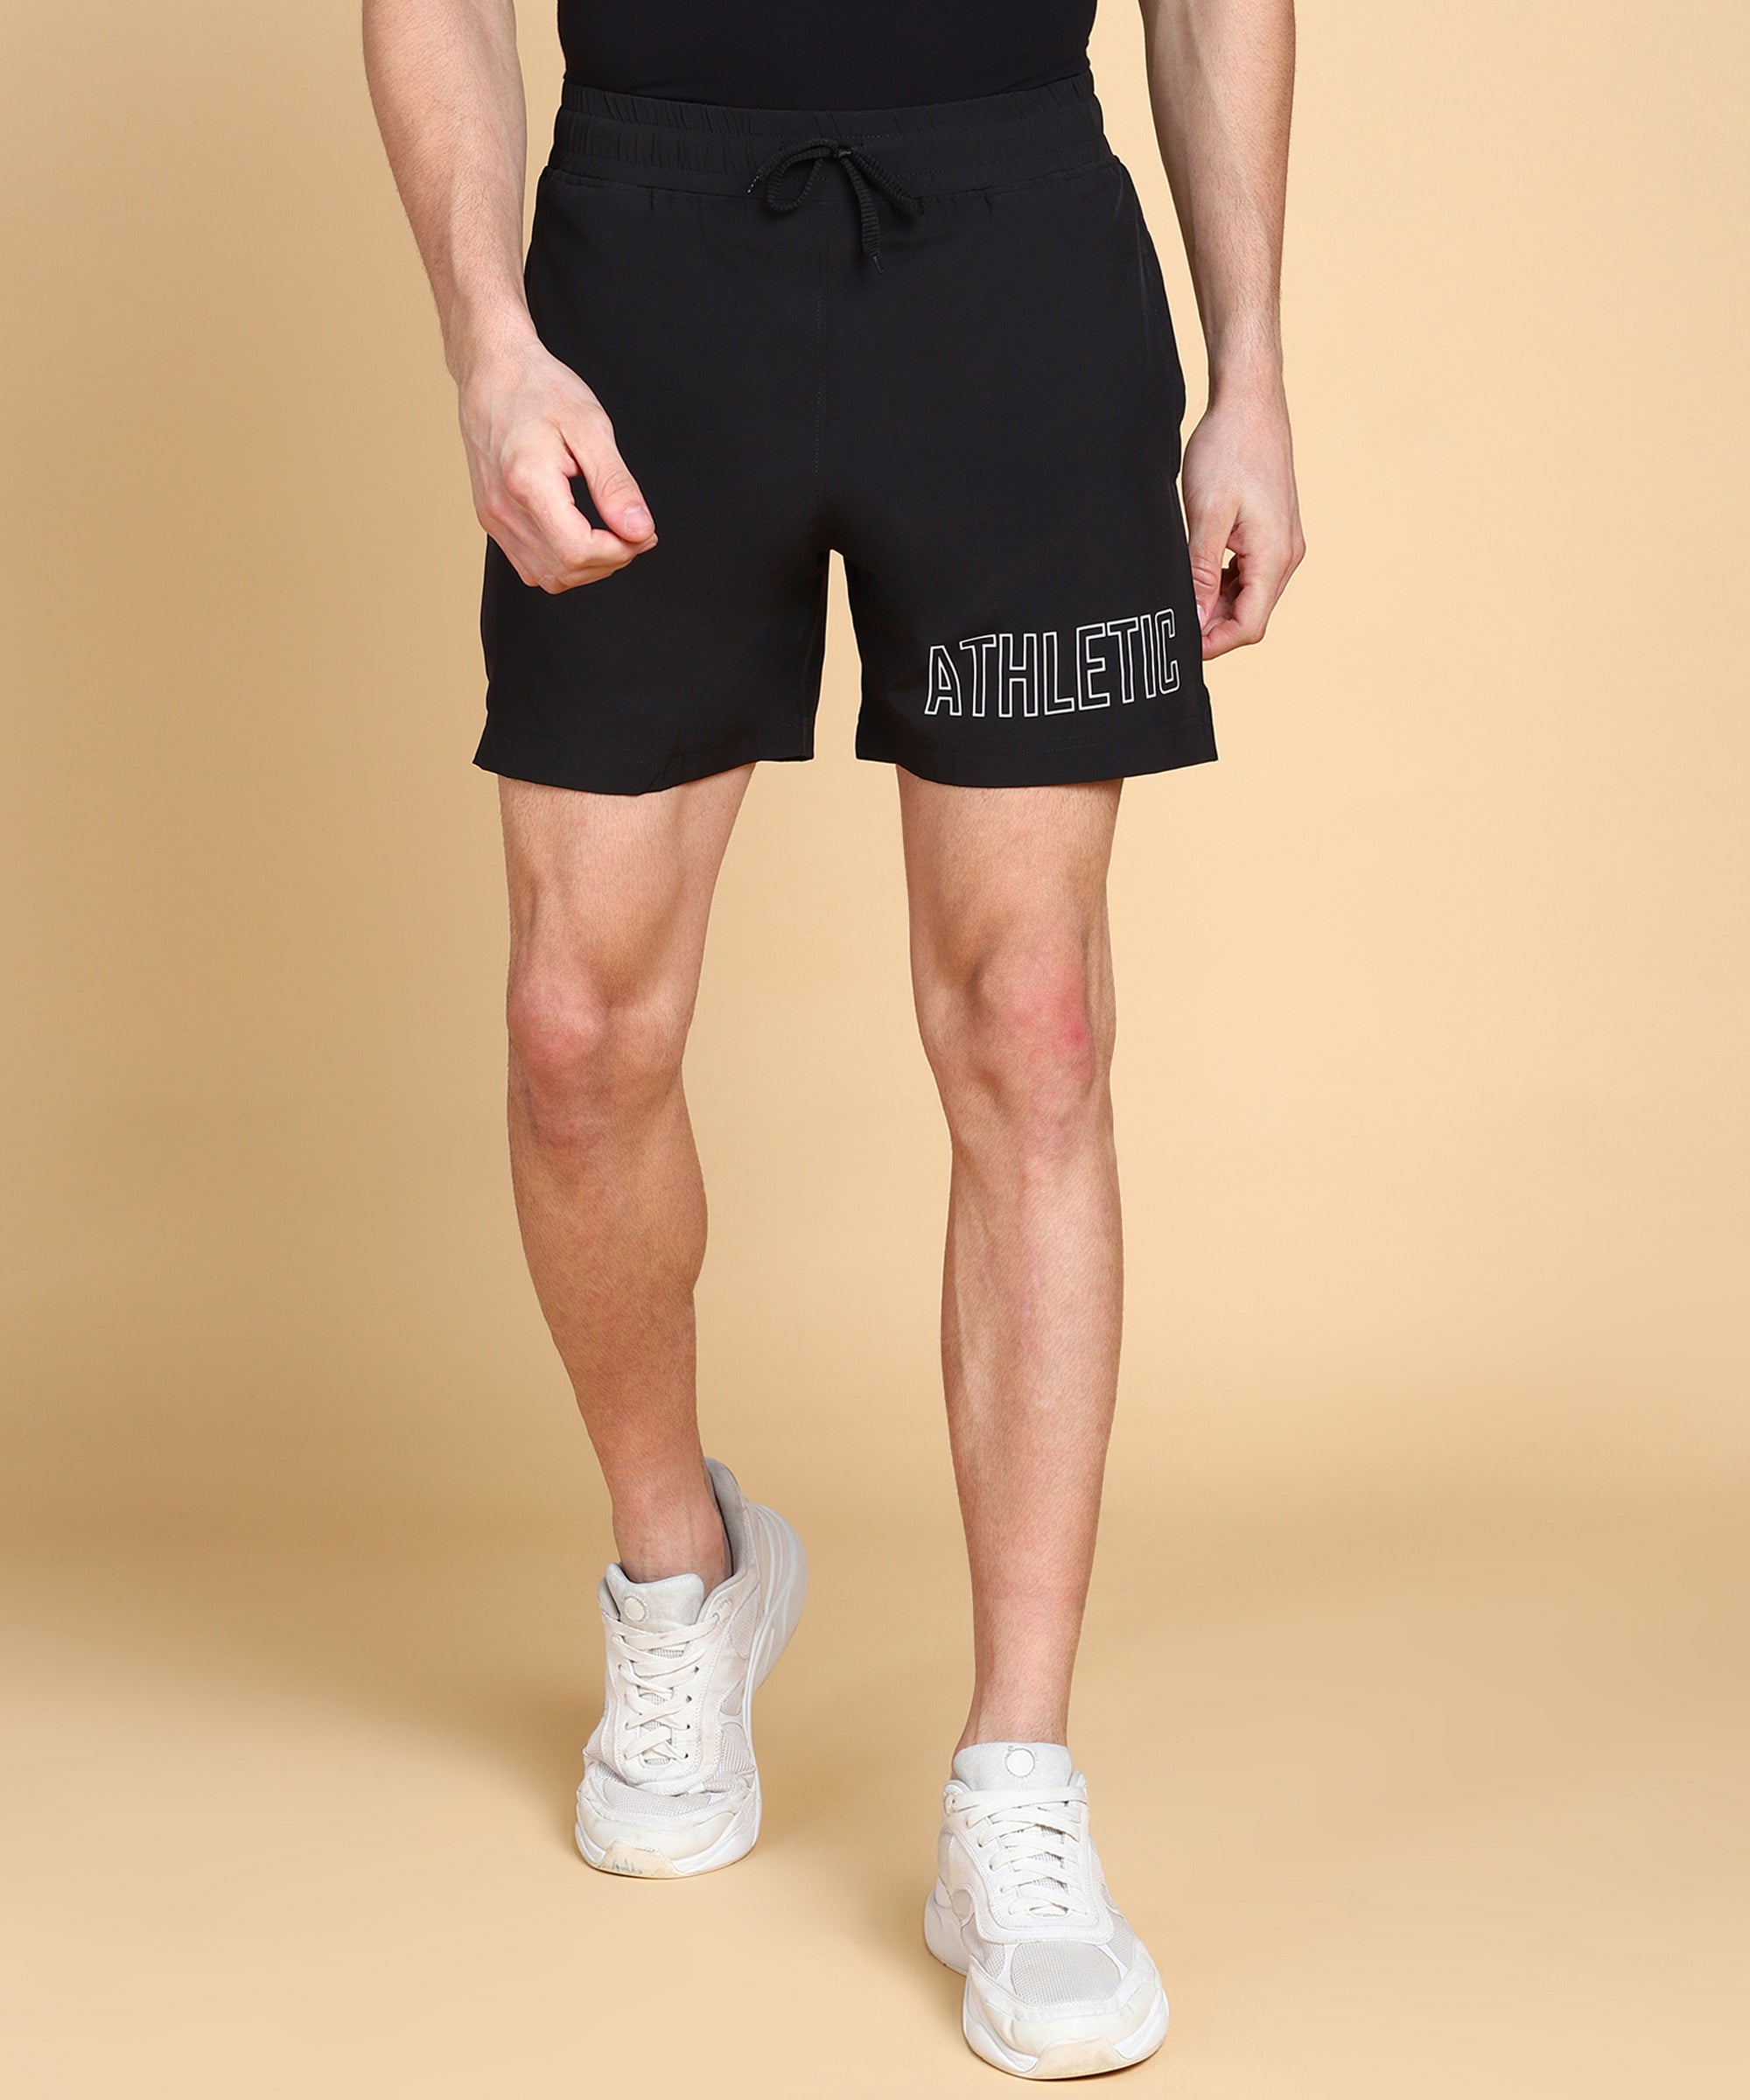 Athletic Men's Shorts - Black